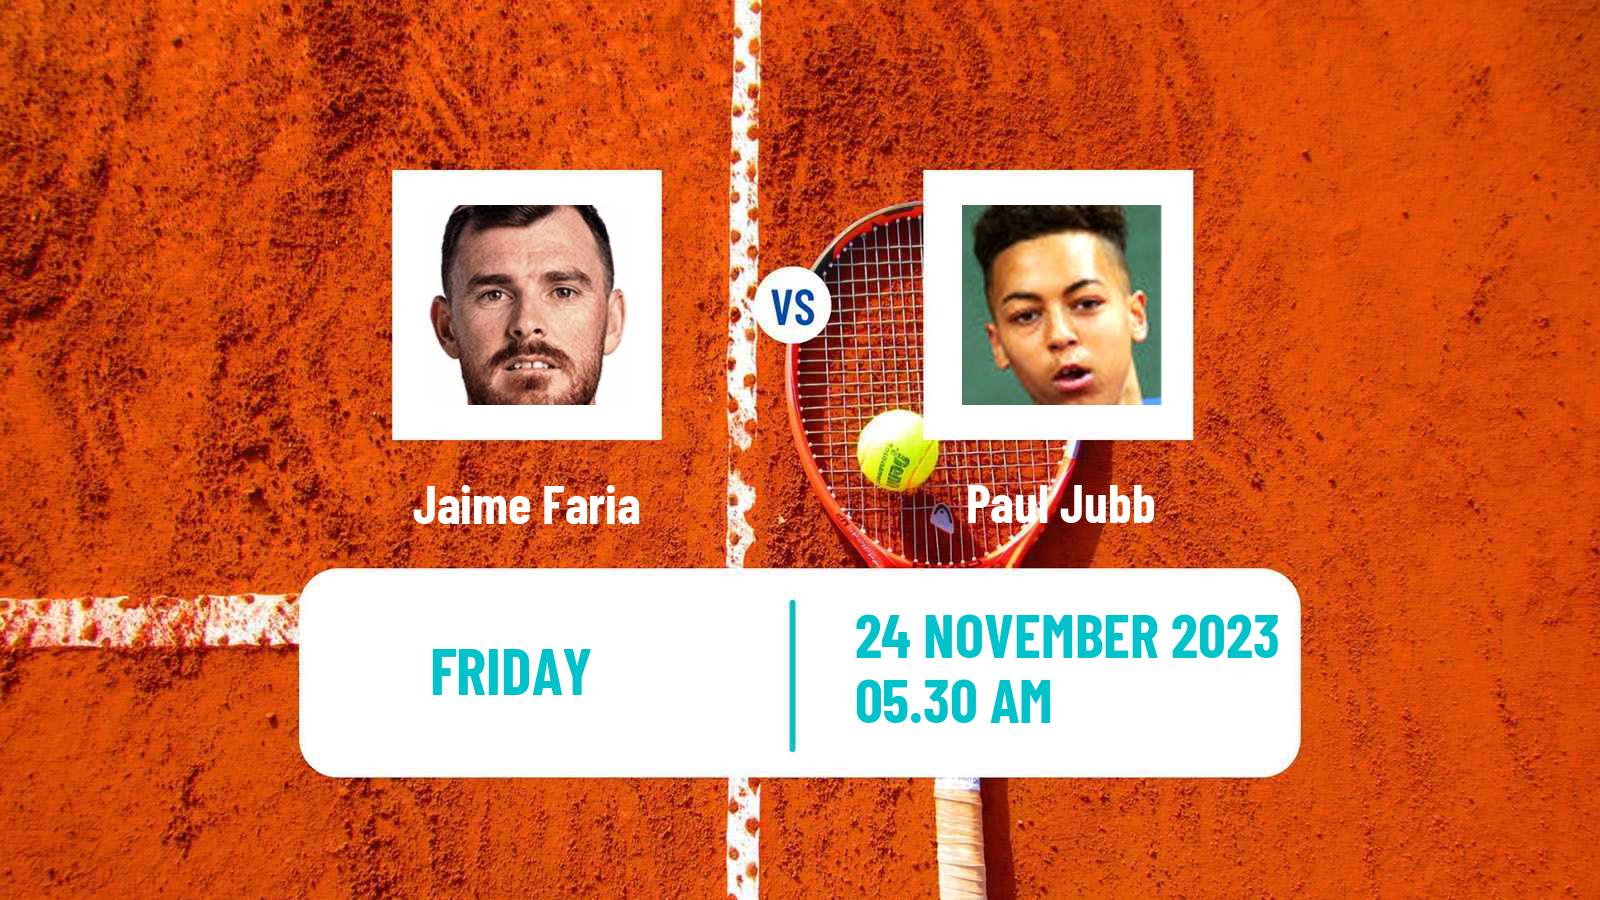 Tennis ITF M25 Vale Do Lobo 2 Men Jaime Faria - Paul Jubb